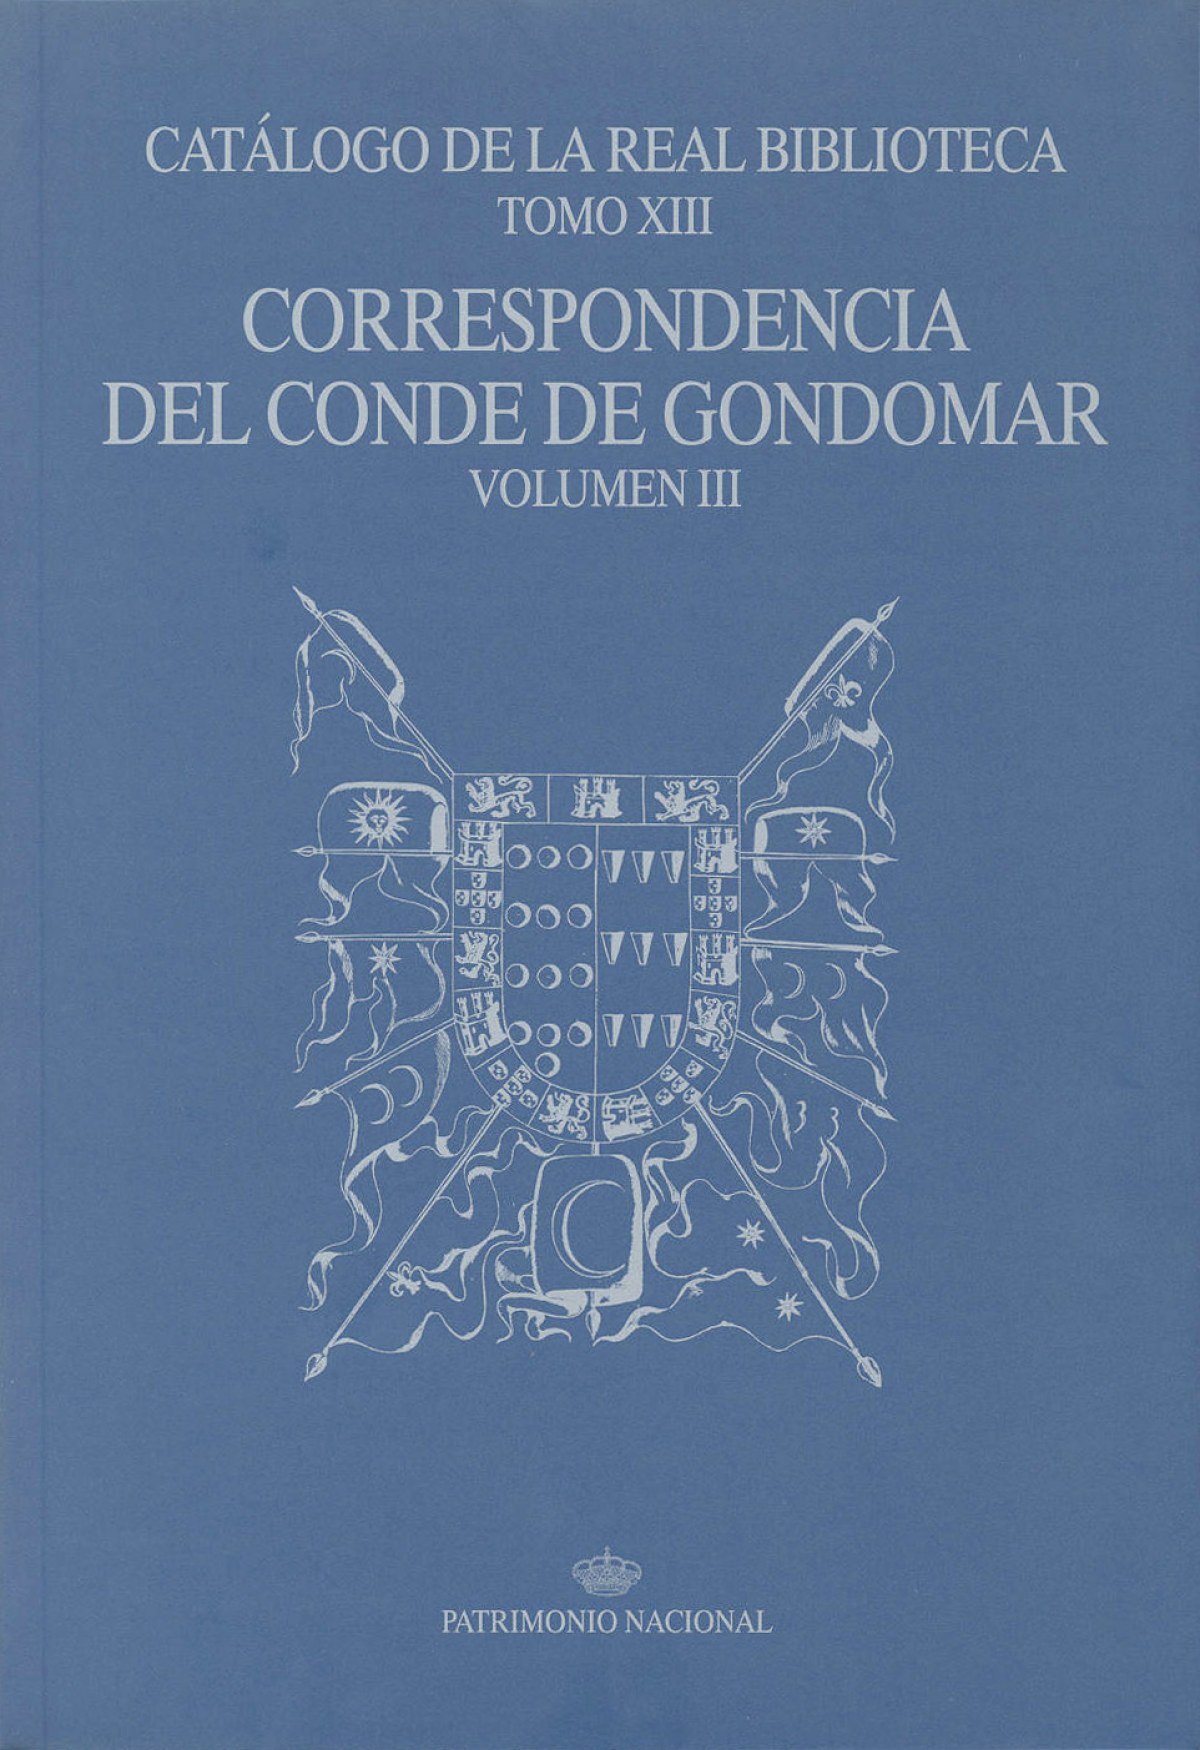 Catálogo de la Real Biblioteca - Vv.Aa.